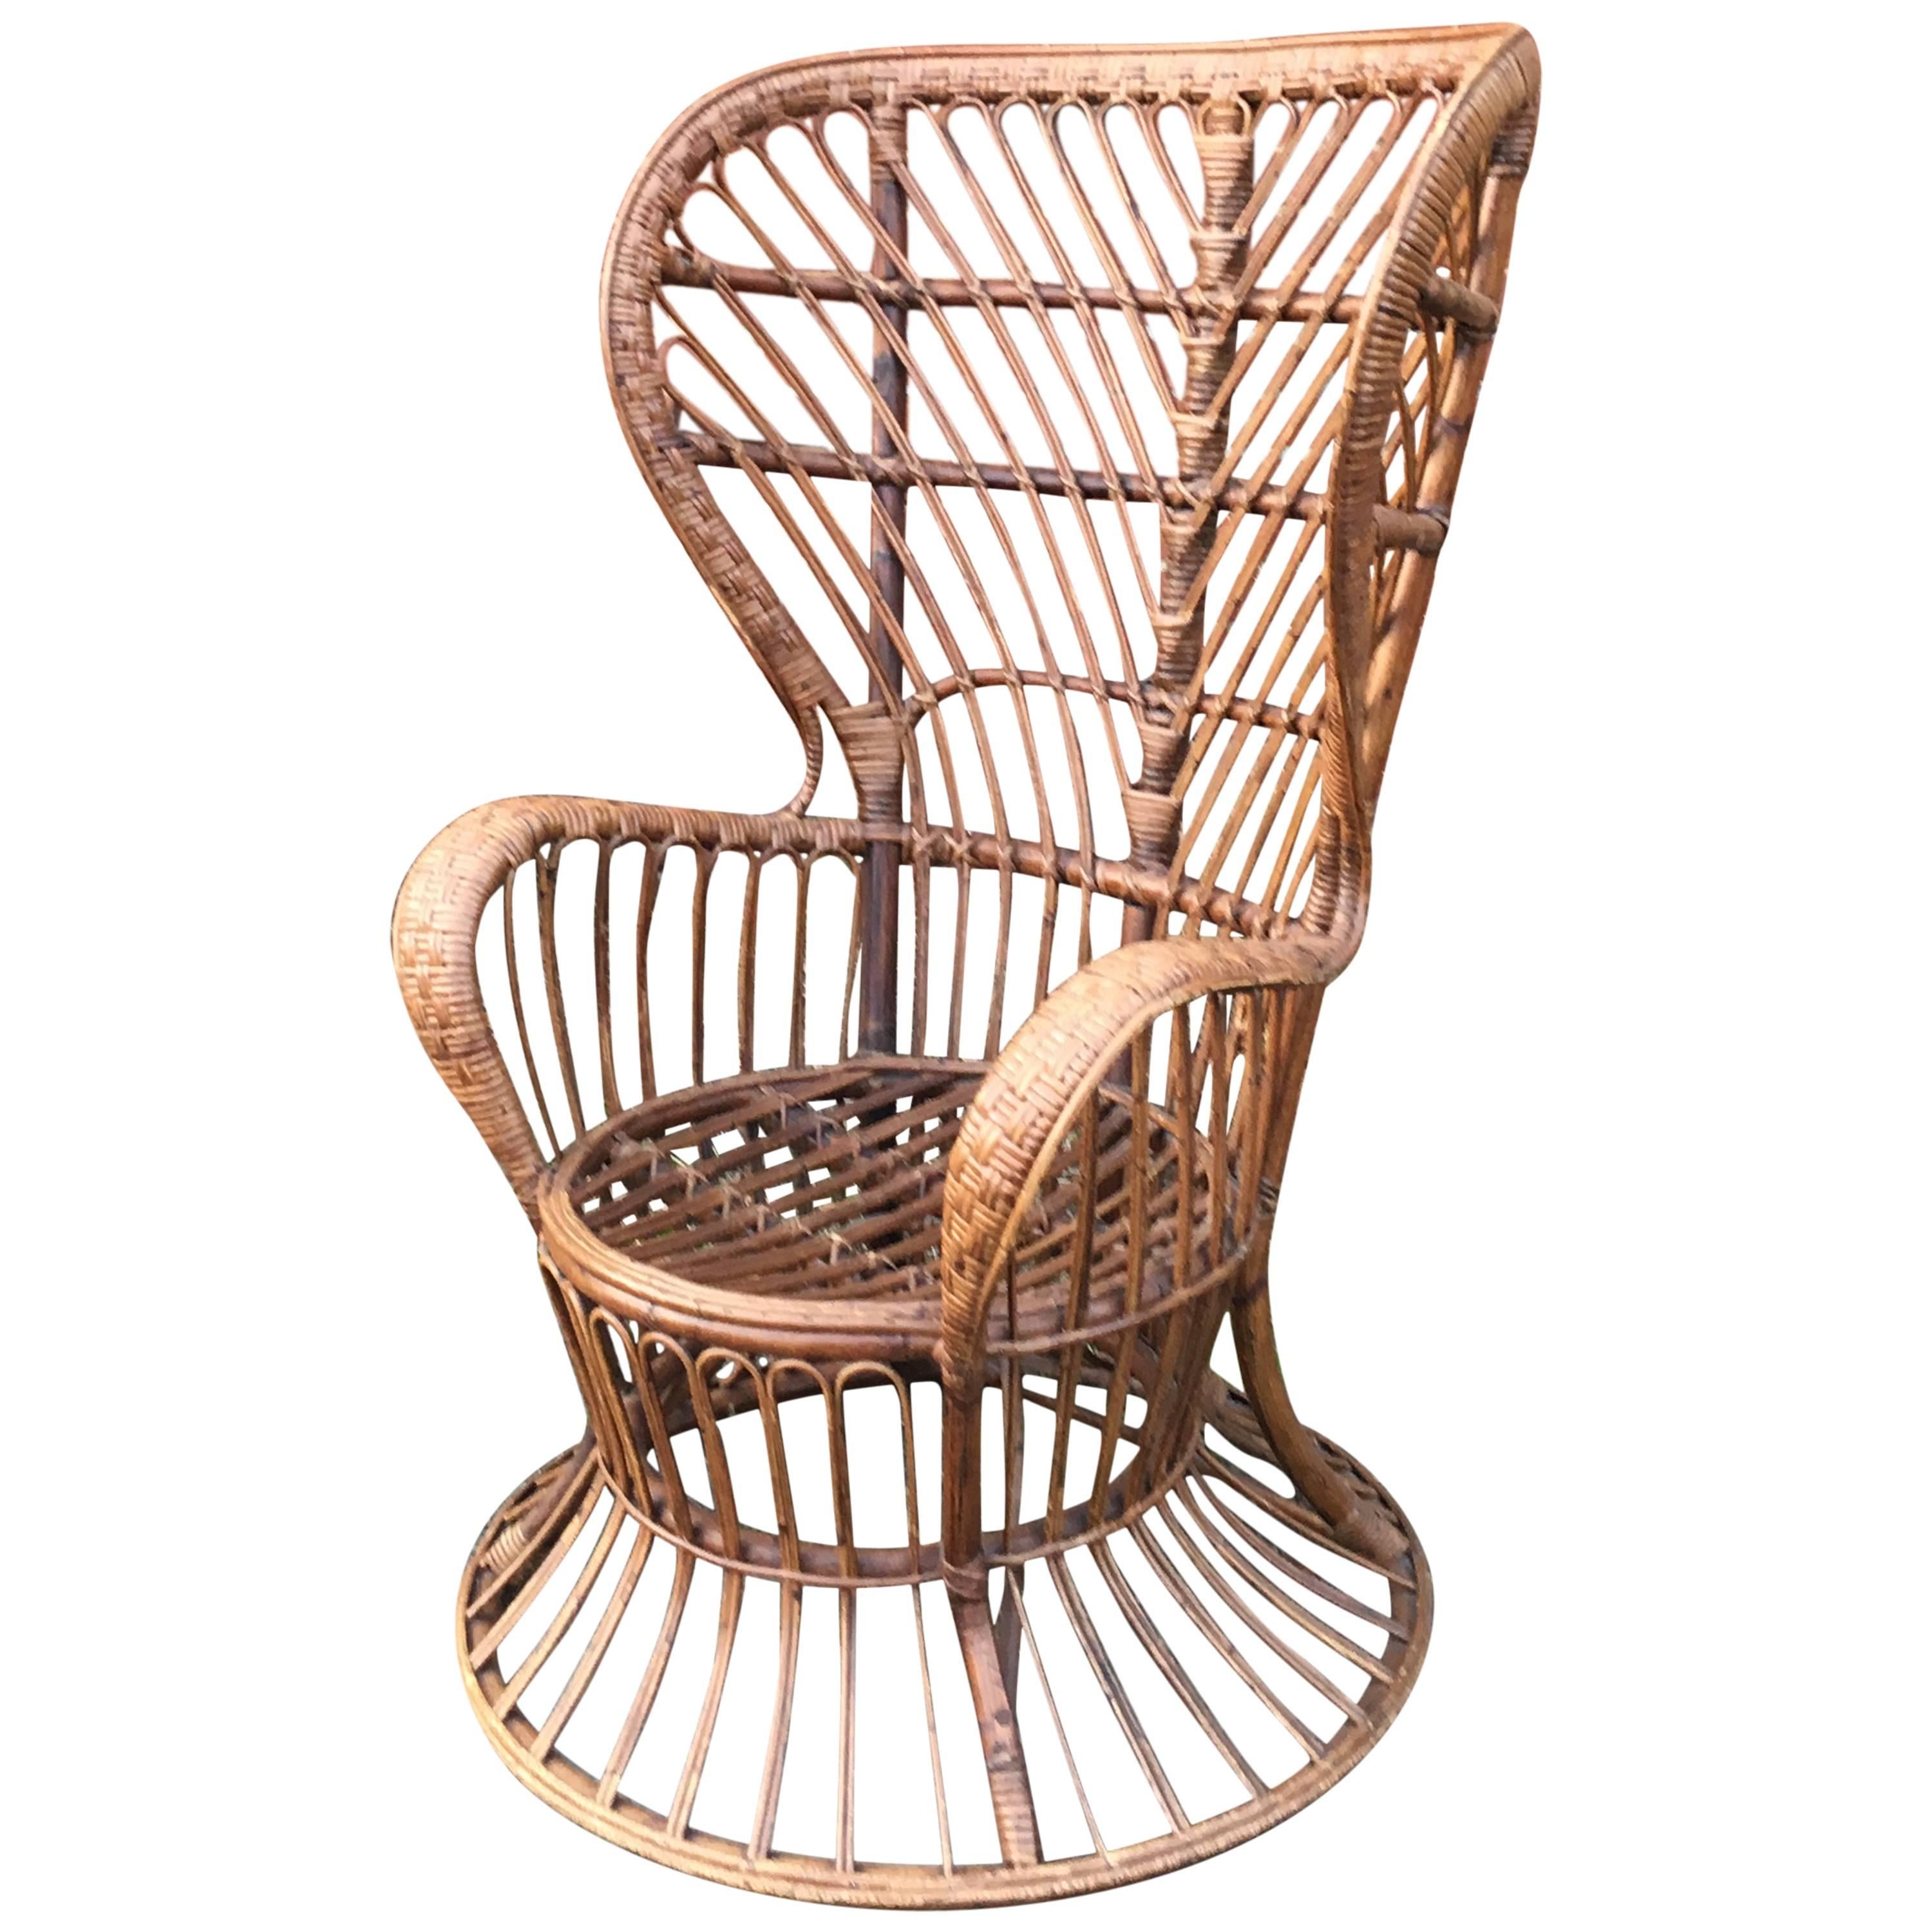 High Wingback Wicker Chair by Lio Carminati, designed ca. 1948